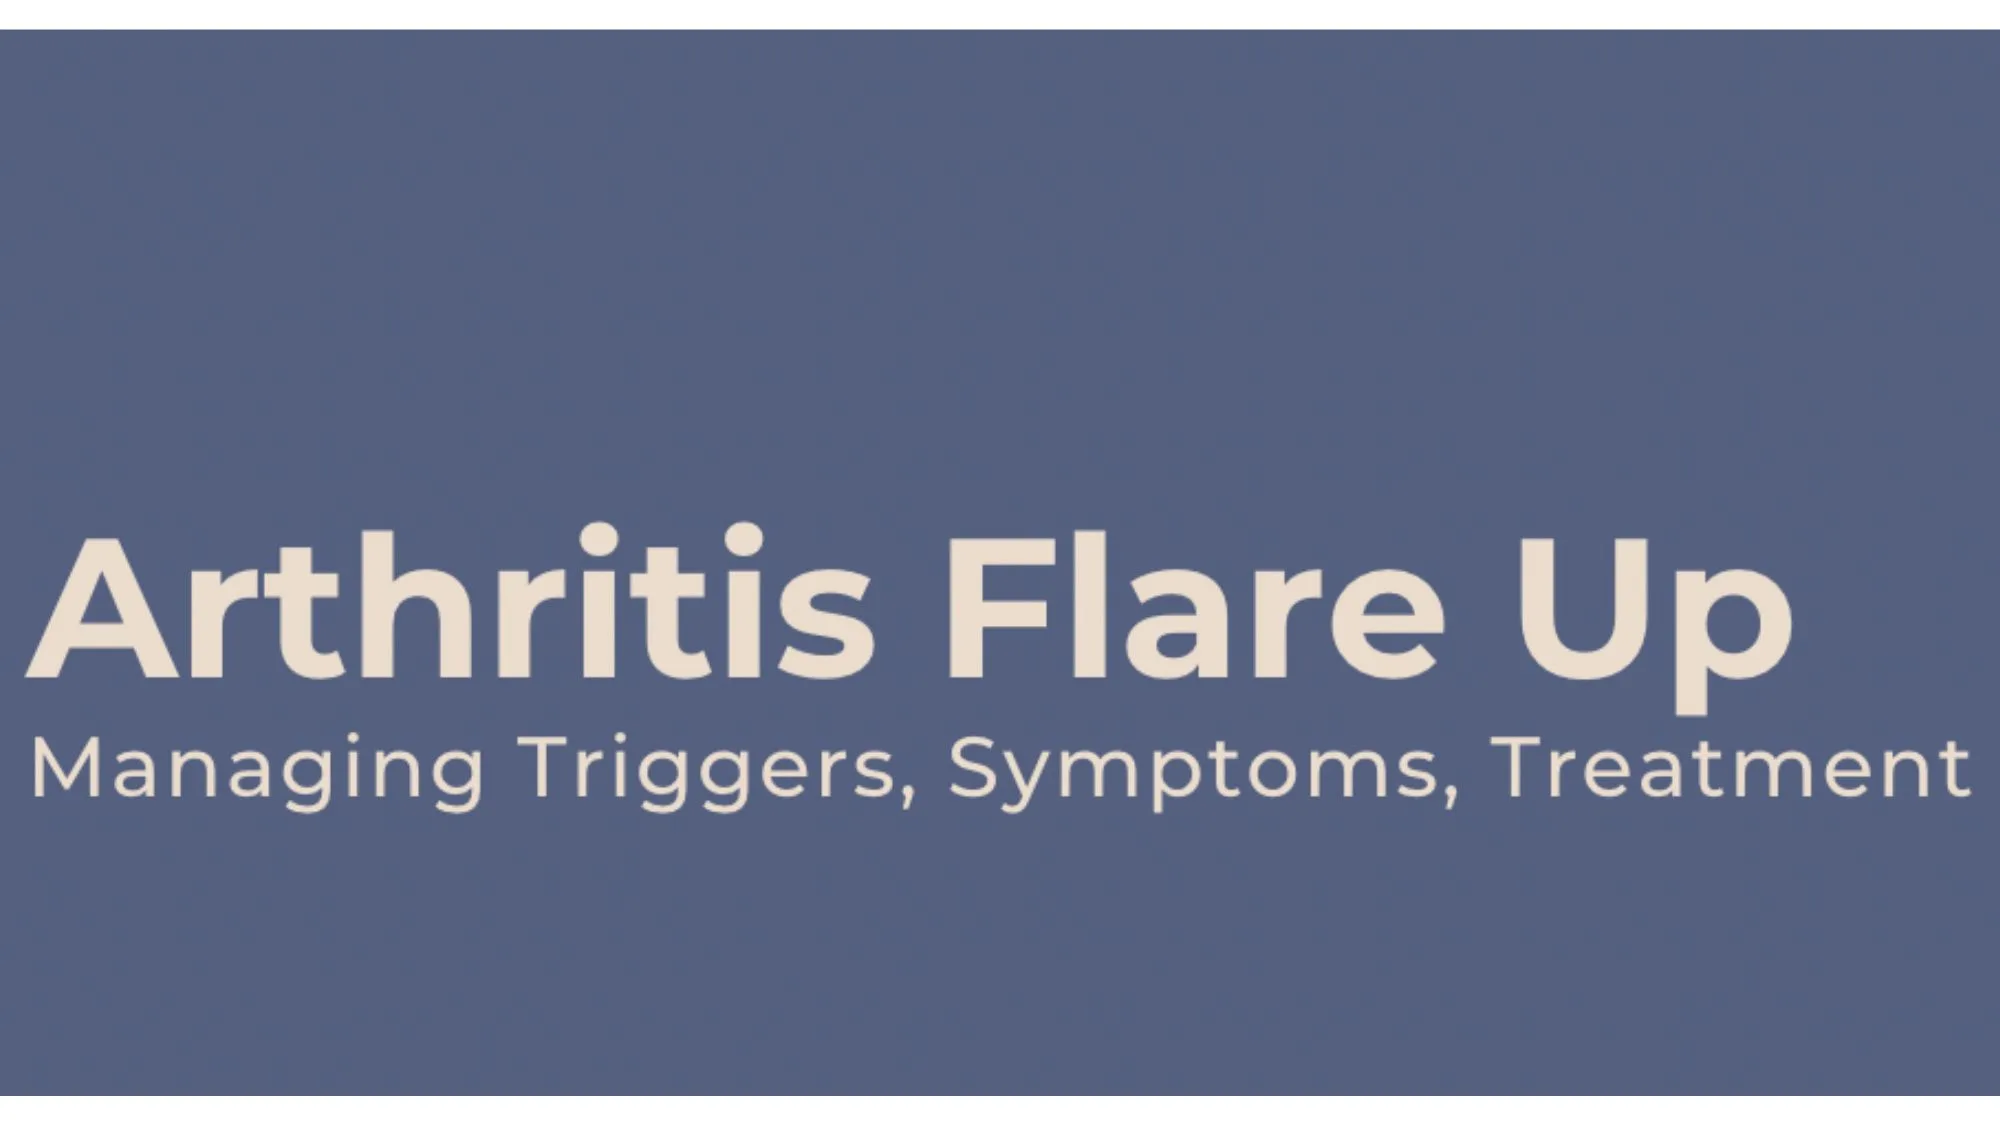 arthritis flare up